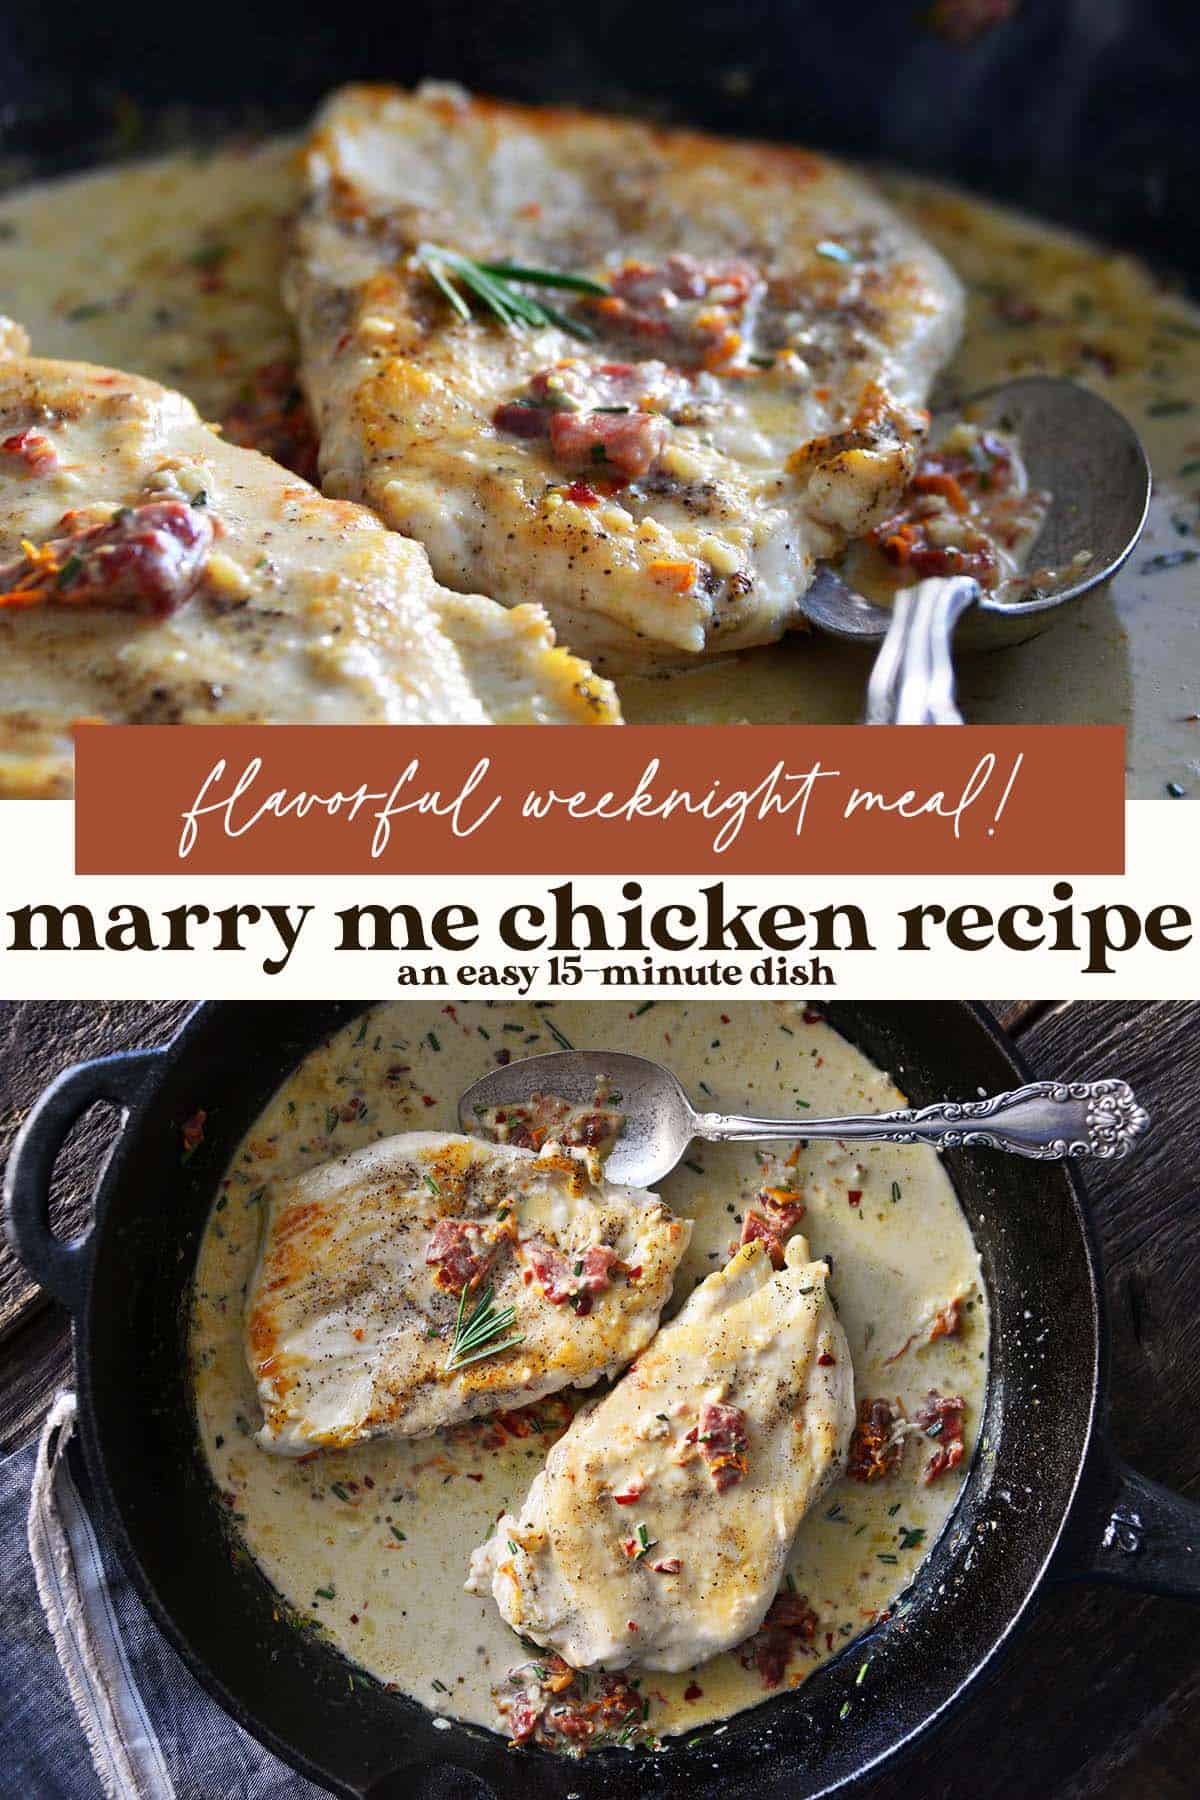 marry me chicken recipe pin